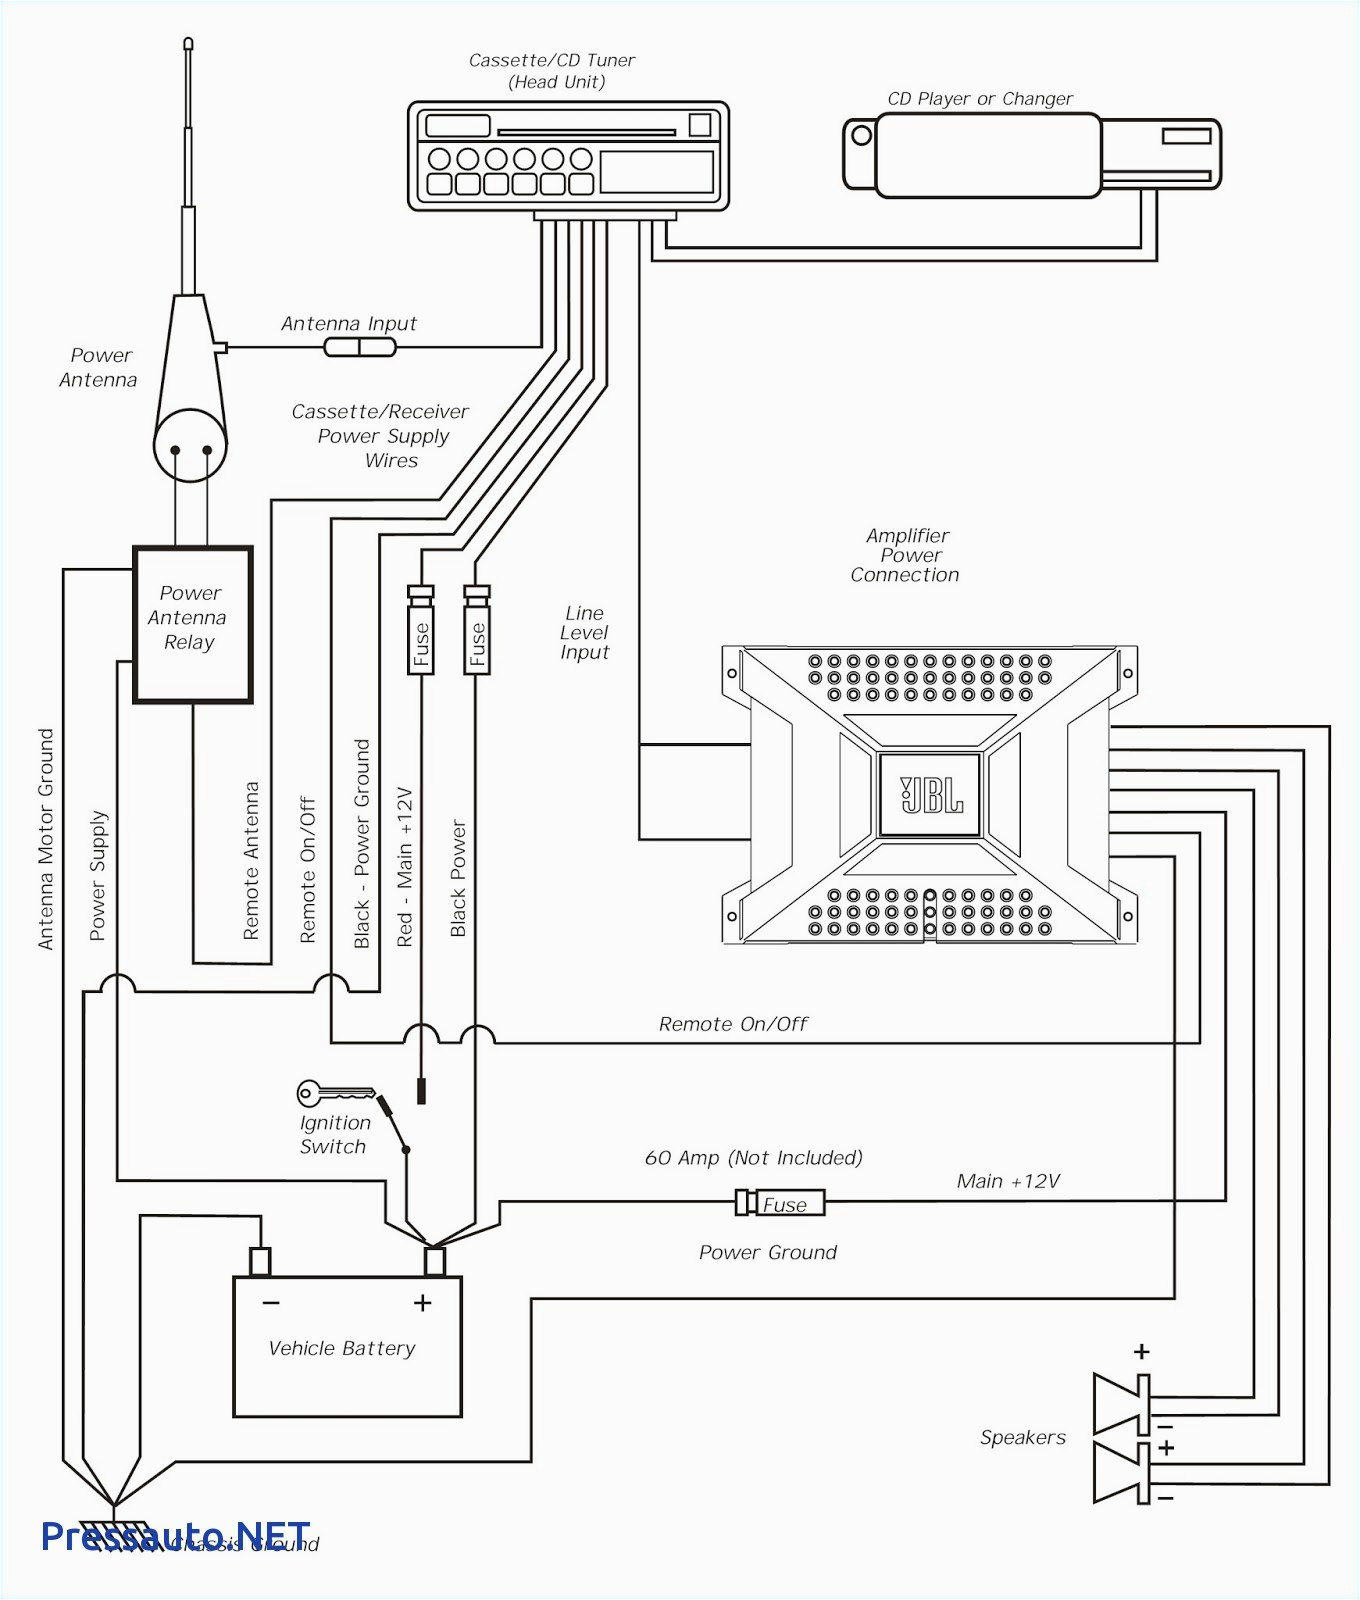 wiring diagram for cd player wiring diagram jvc car stereo wiring harness diagram car cd player